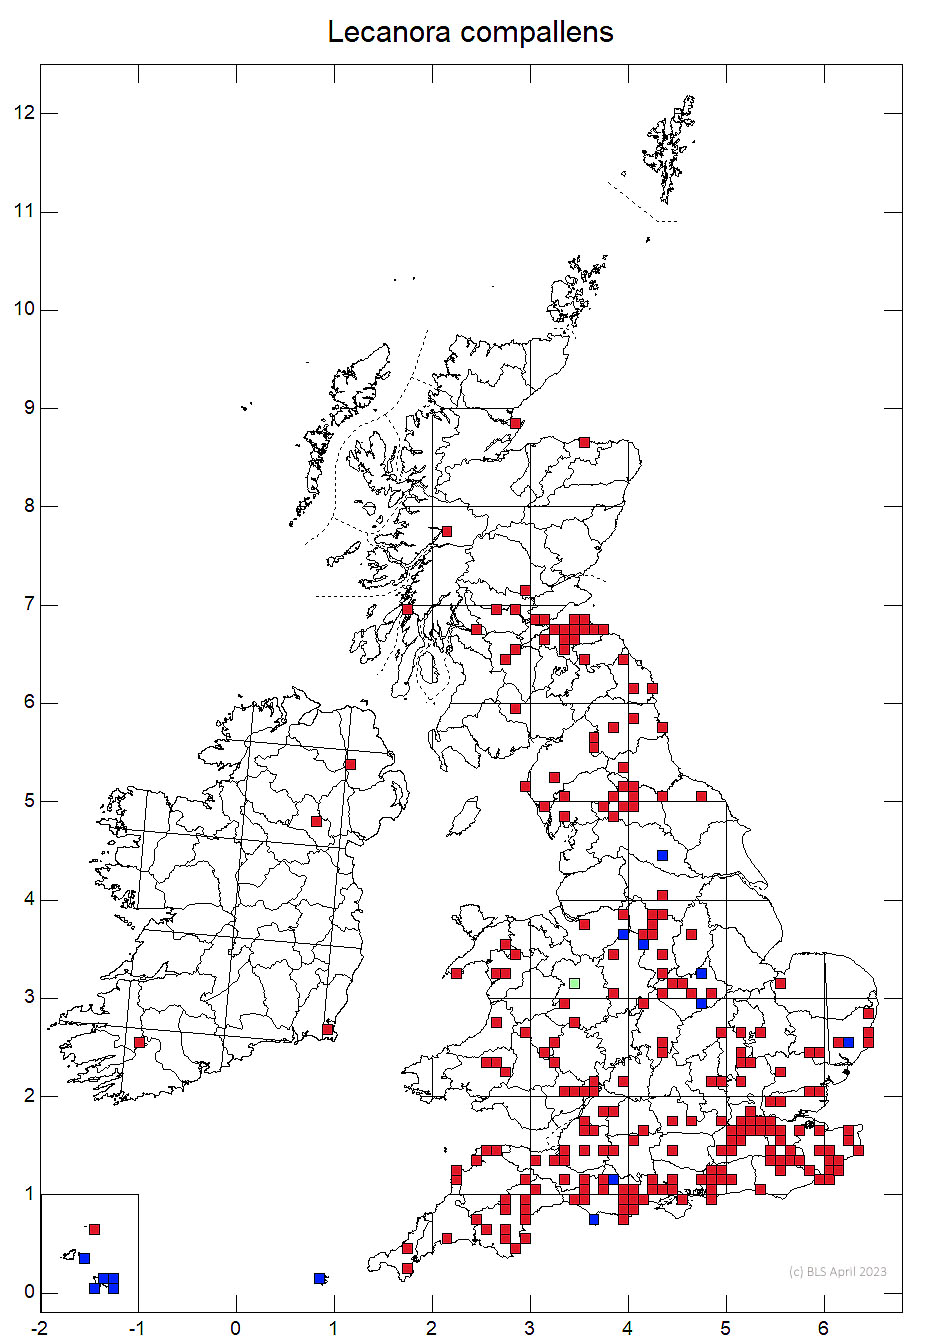 Lecanora compallens 10km sq distribution map